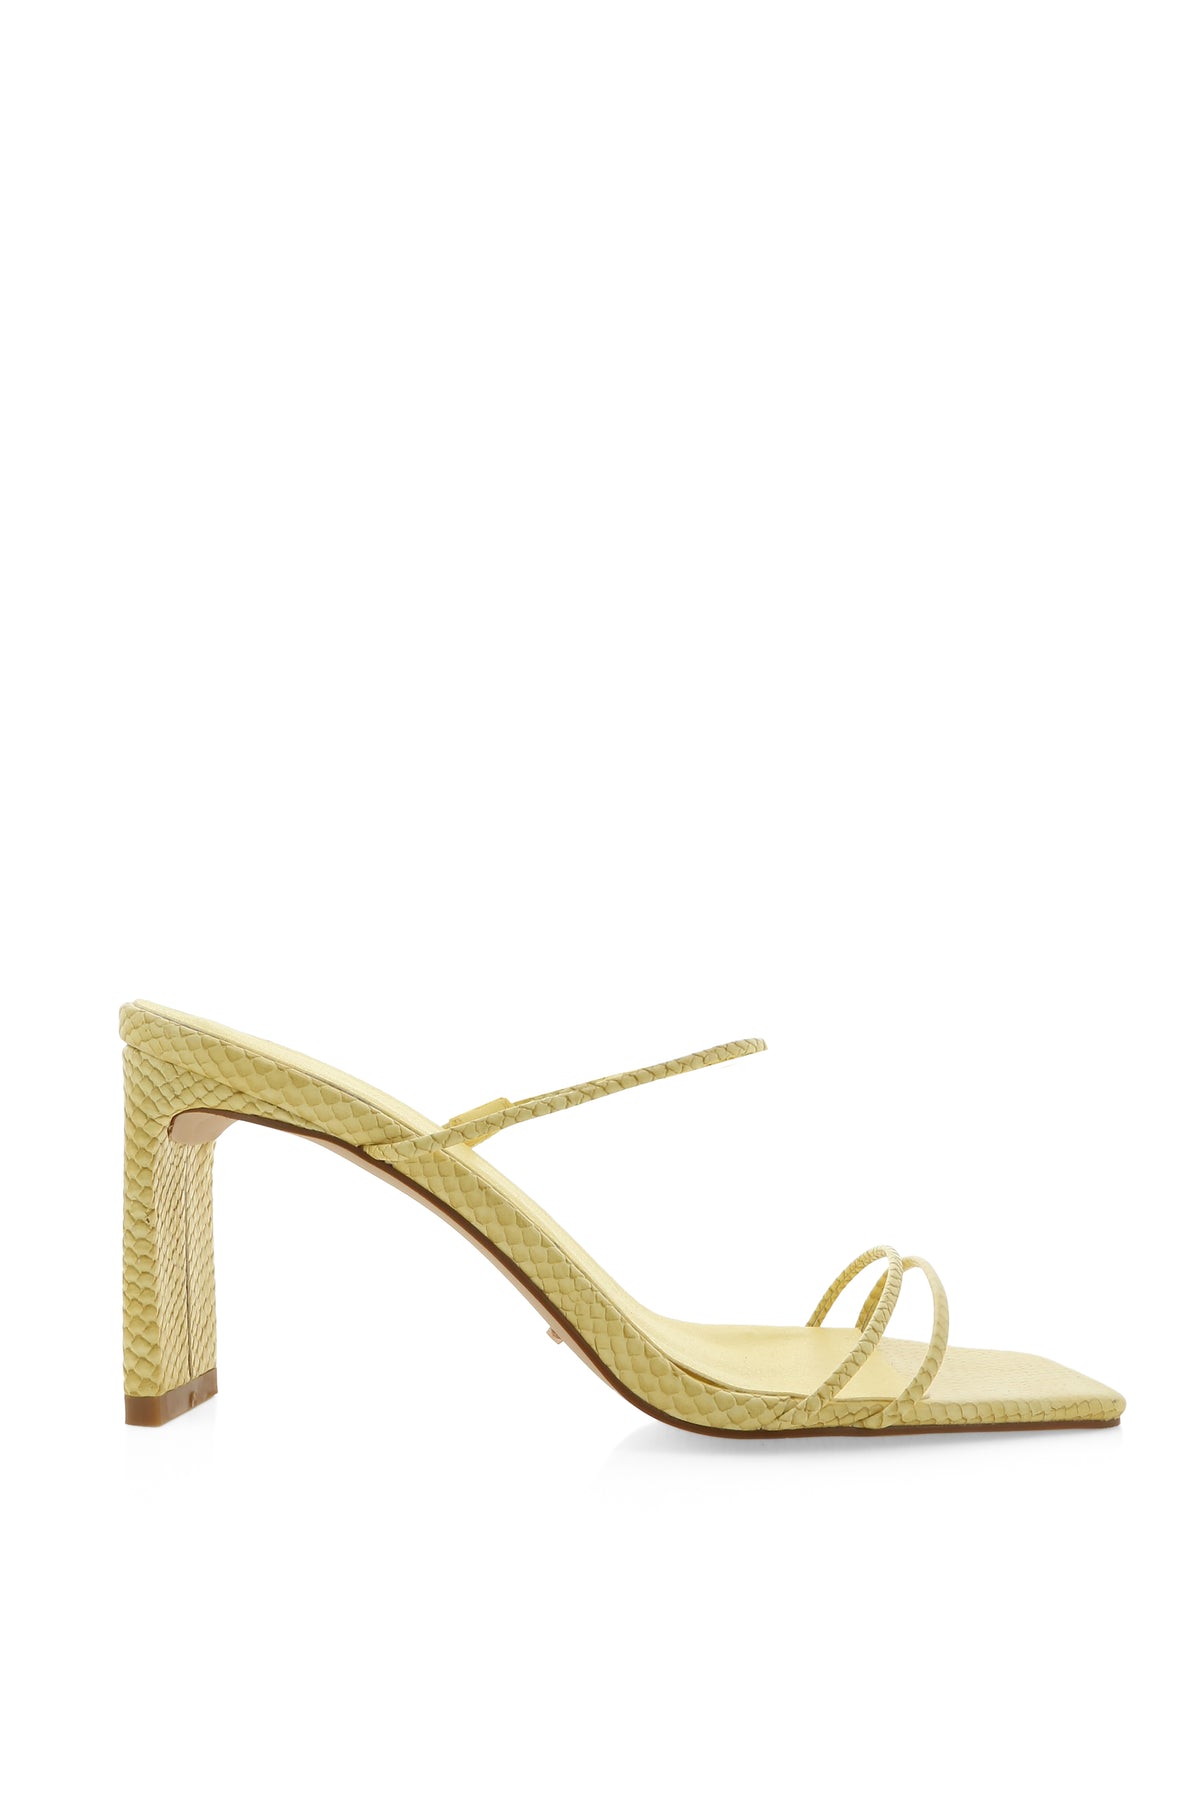 yellow block heels - katherine by billini